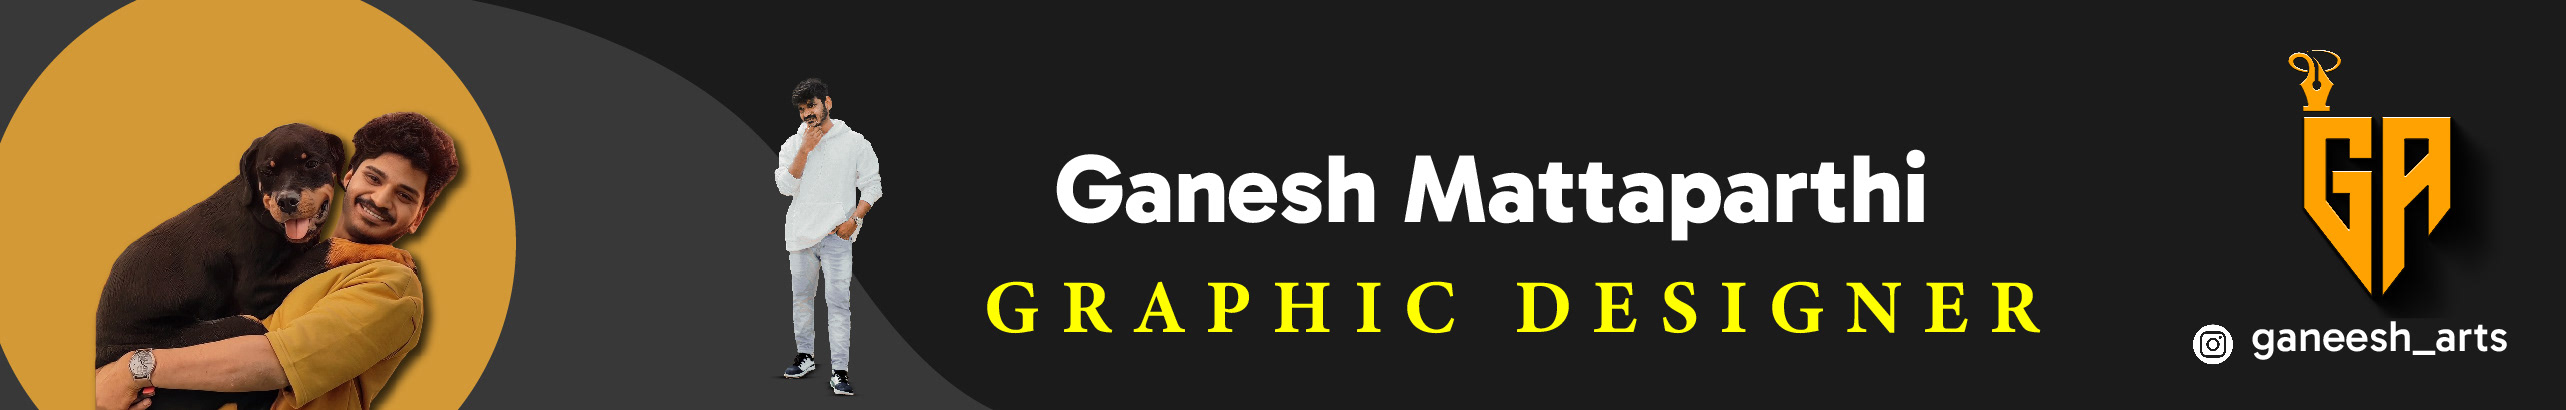 Ganesh Mattaparthi's profile banner